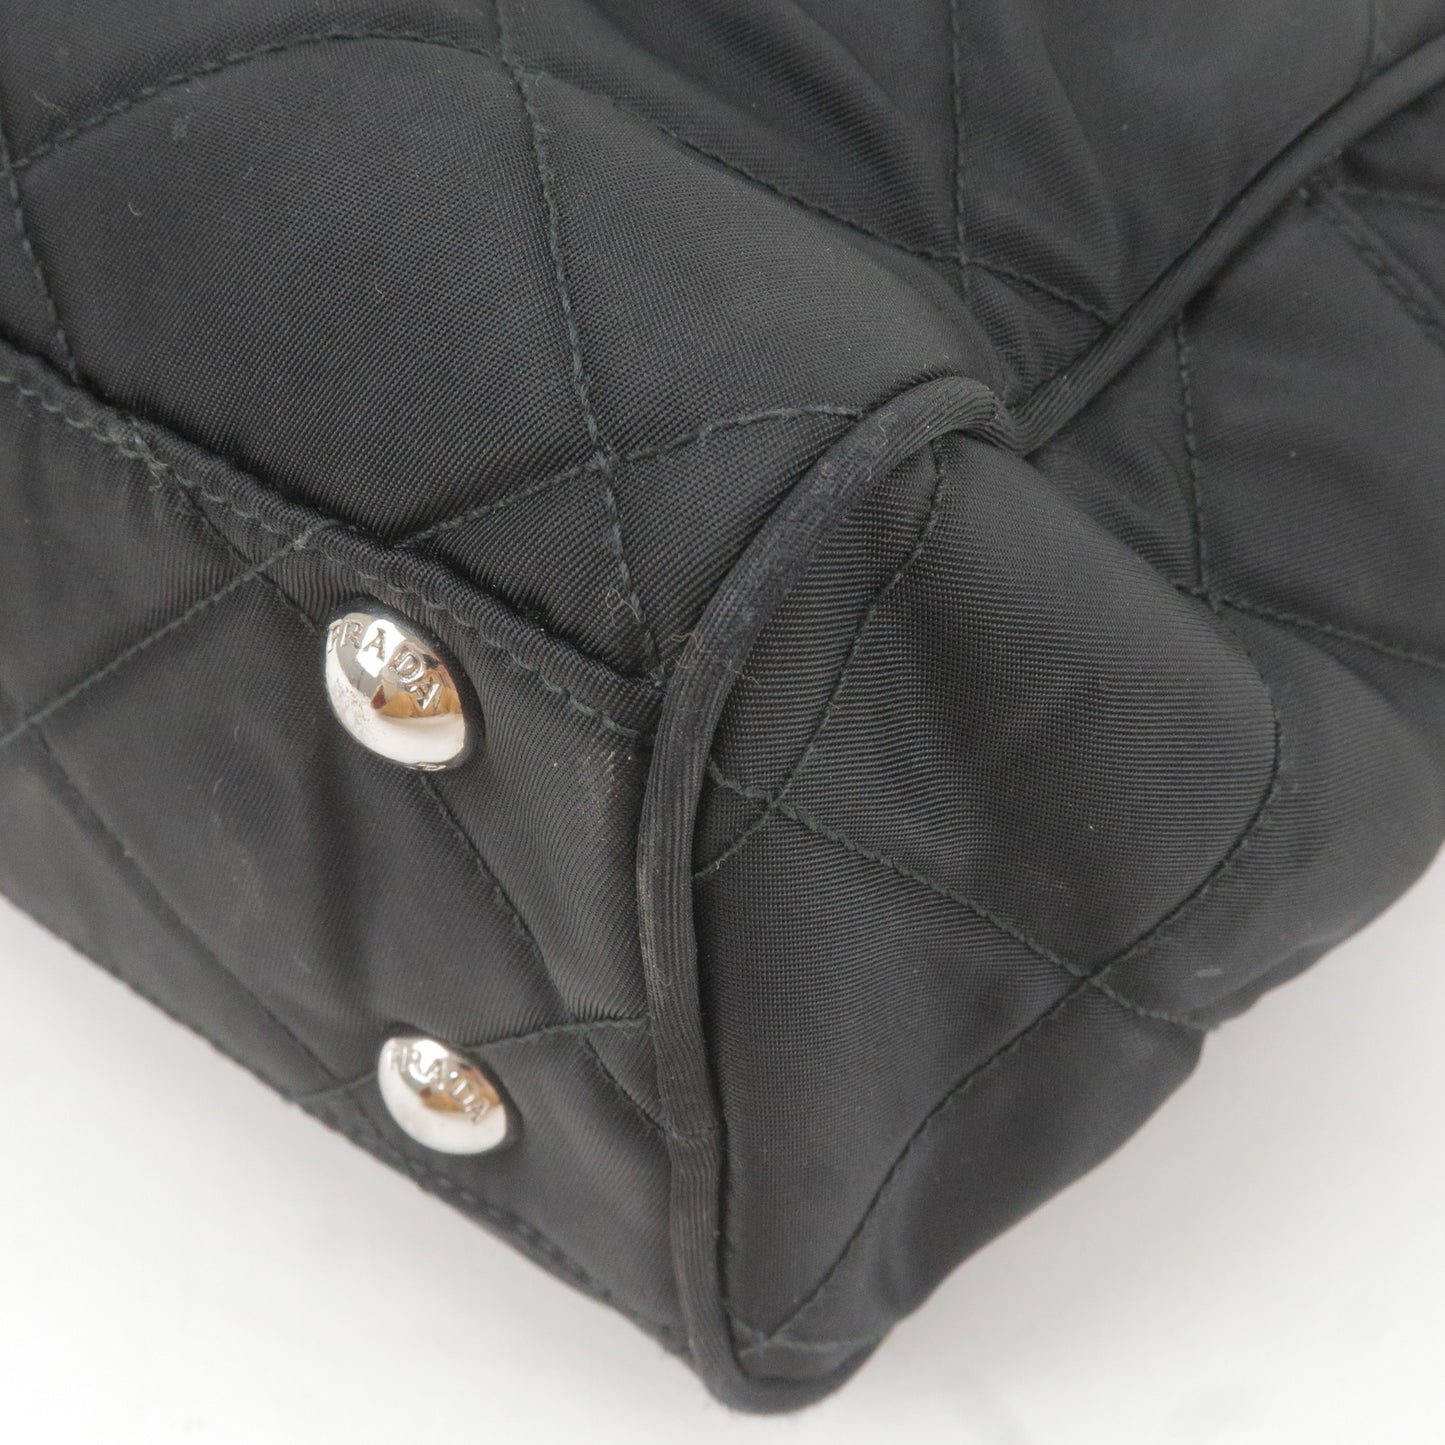 PRADA Nylon Leather Quilting Chain Shoulder Bag Black 1BB072